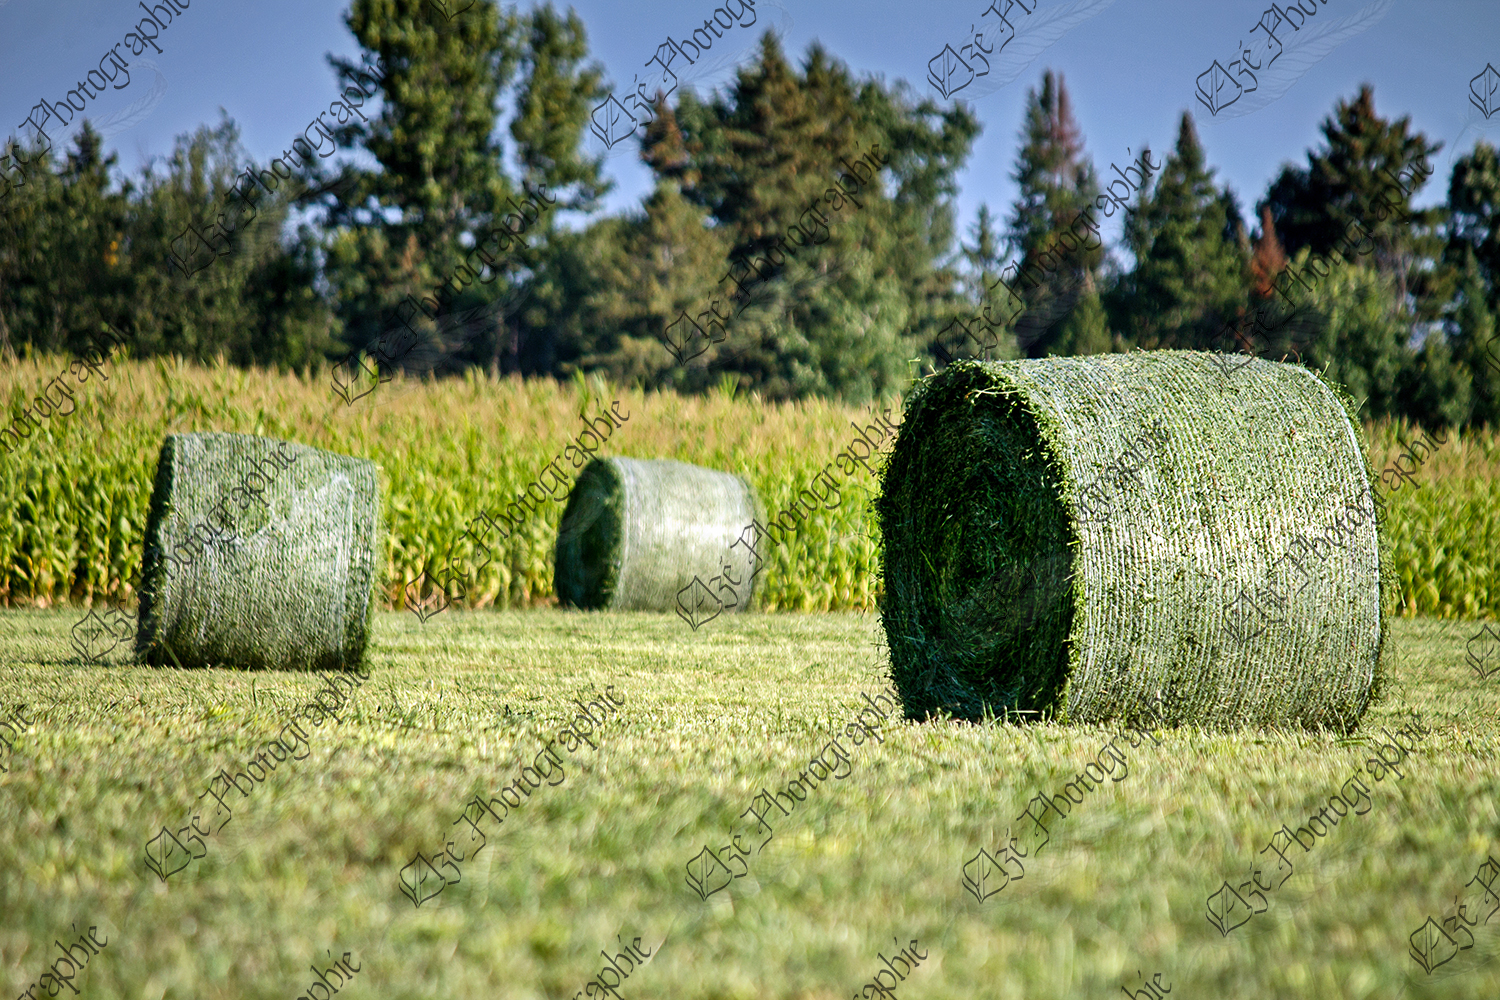 elze_photo_2429_recolte_alimentation_foin_grass_agricultural